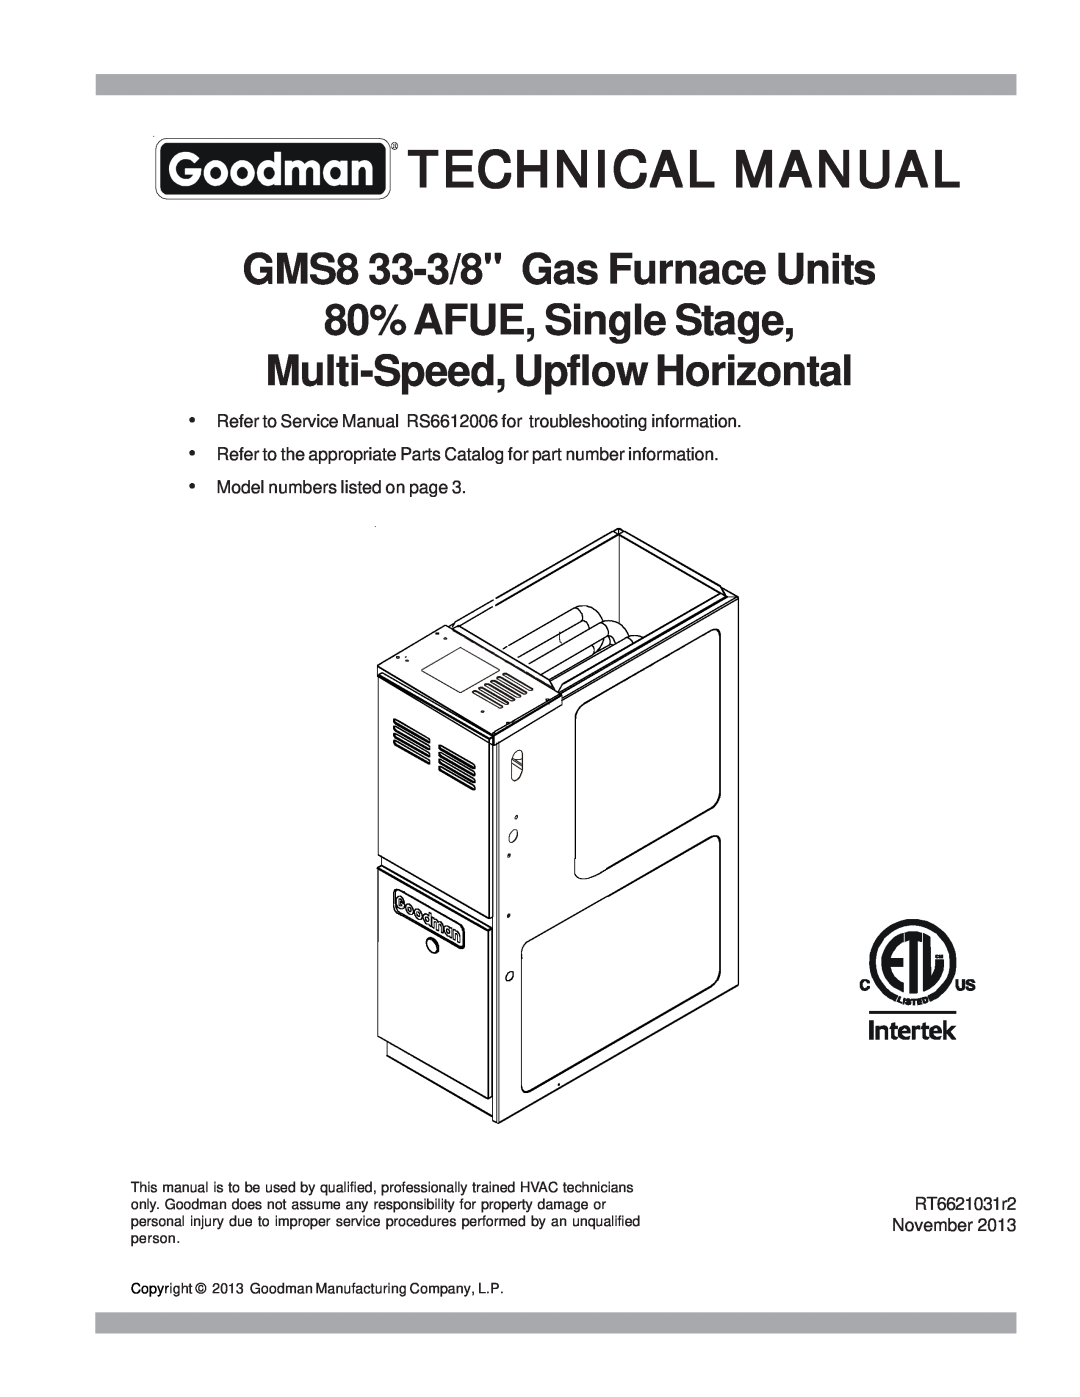 Goodman Mfg GMS8 33-3/8 GAS FURNACE UNITS, RT6621031r2 service manual Technical Manual, GMS8 33-3/8Gas Furnace Units 